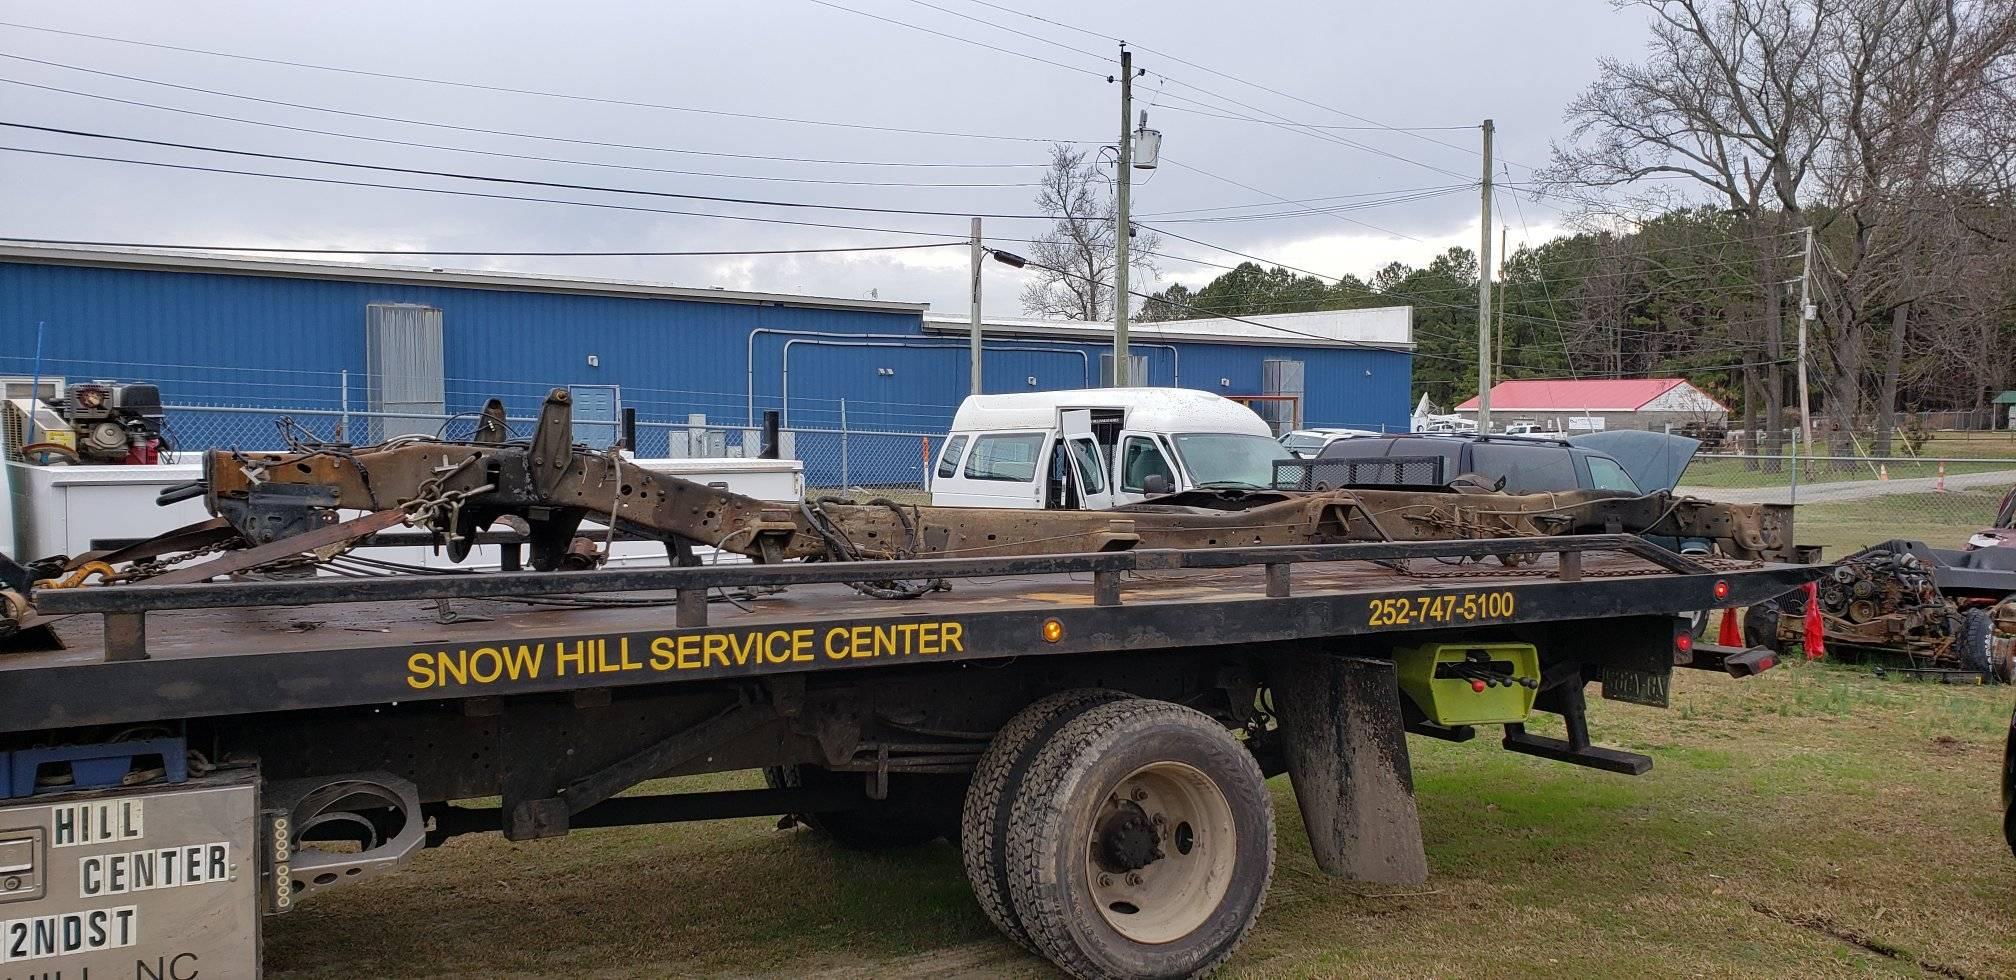 Snow Hill Service Center